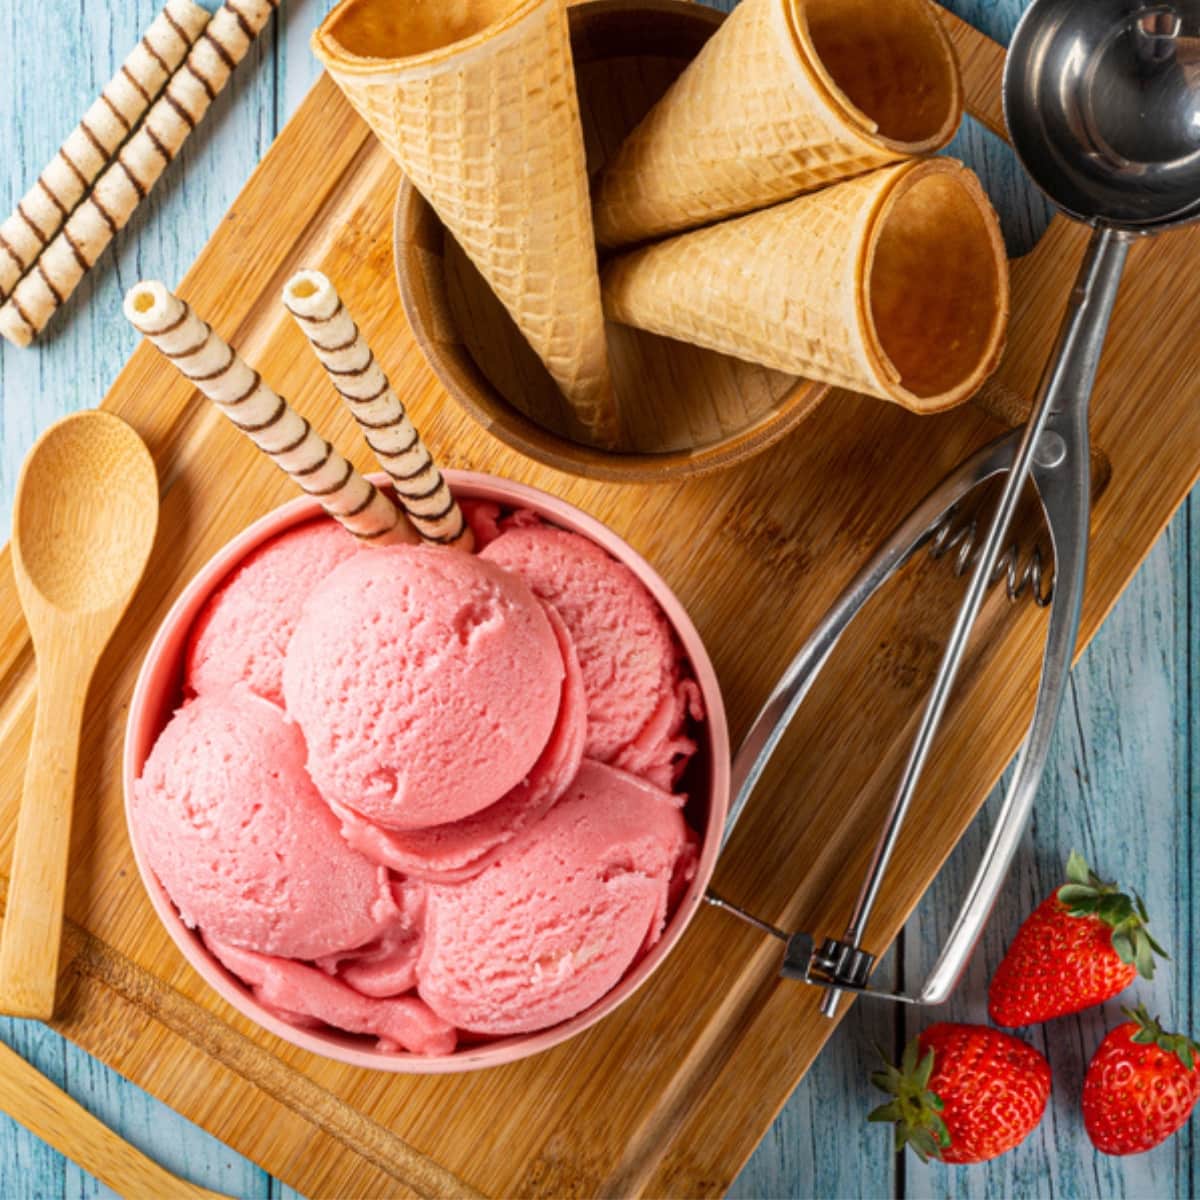 Strawberry ice cream, cones, and a wooden board.